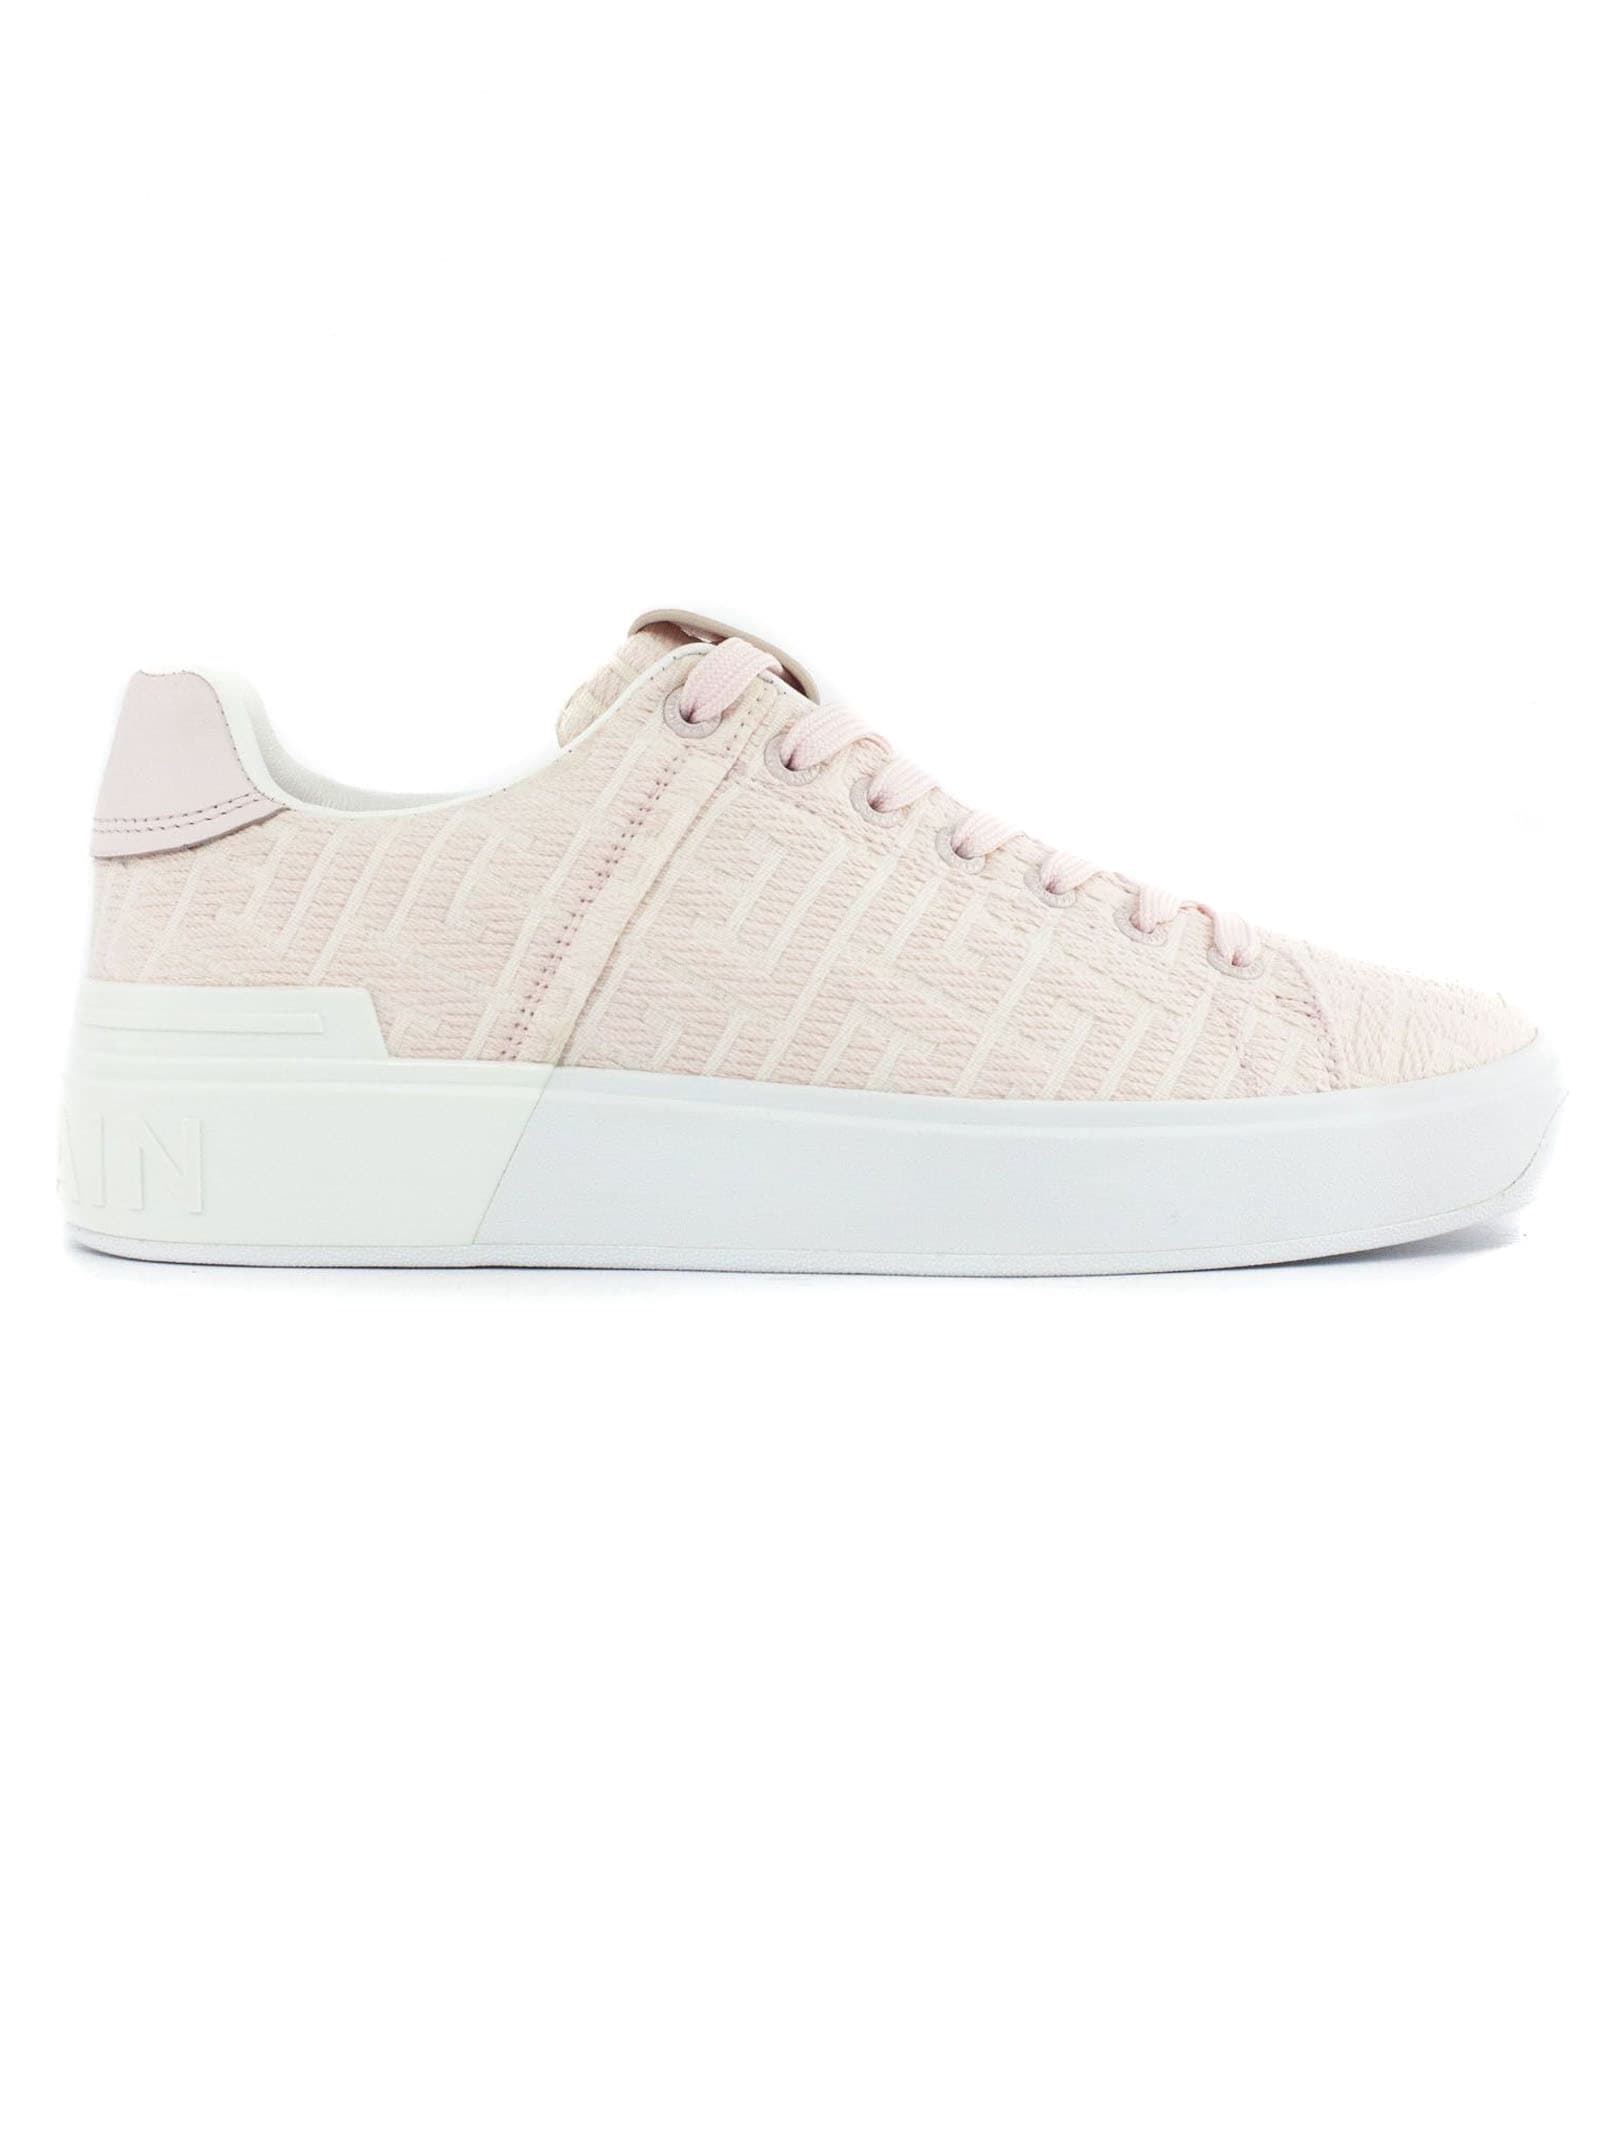 Balmain Ivory And Pink Jacquard Sneakers